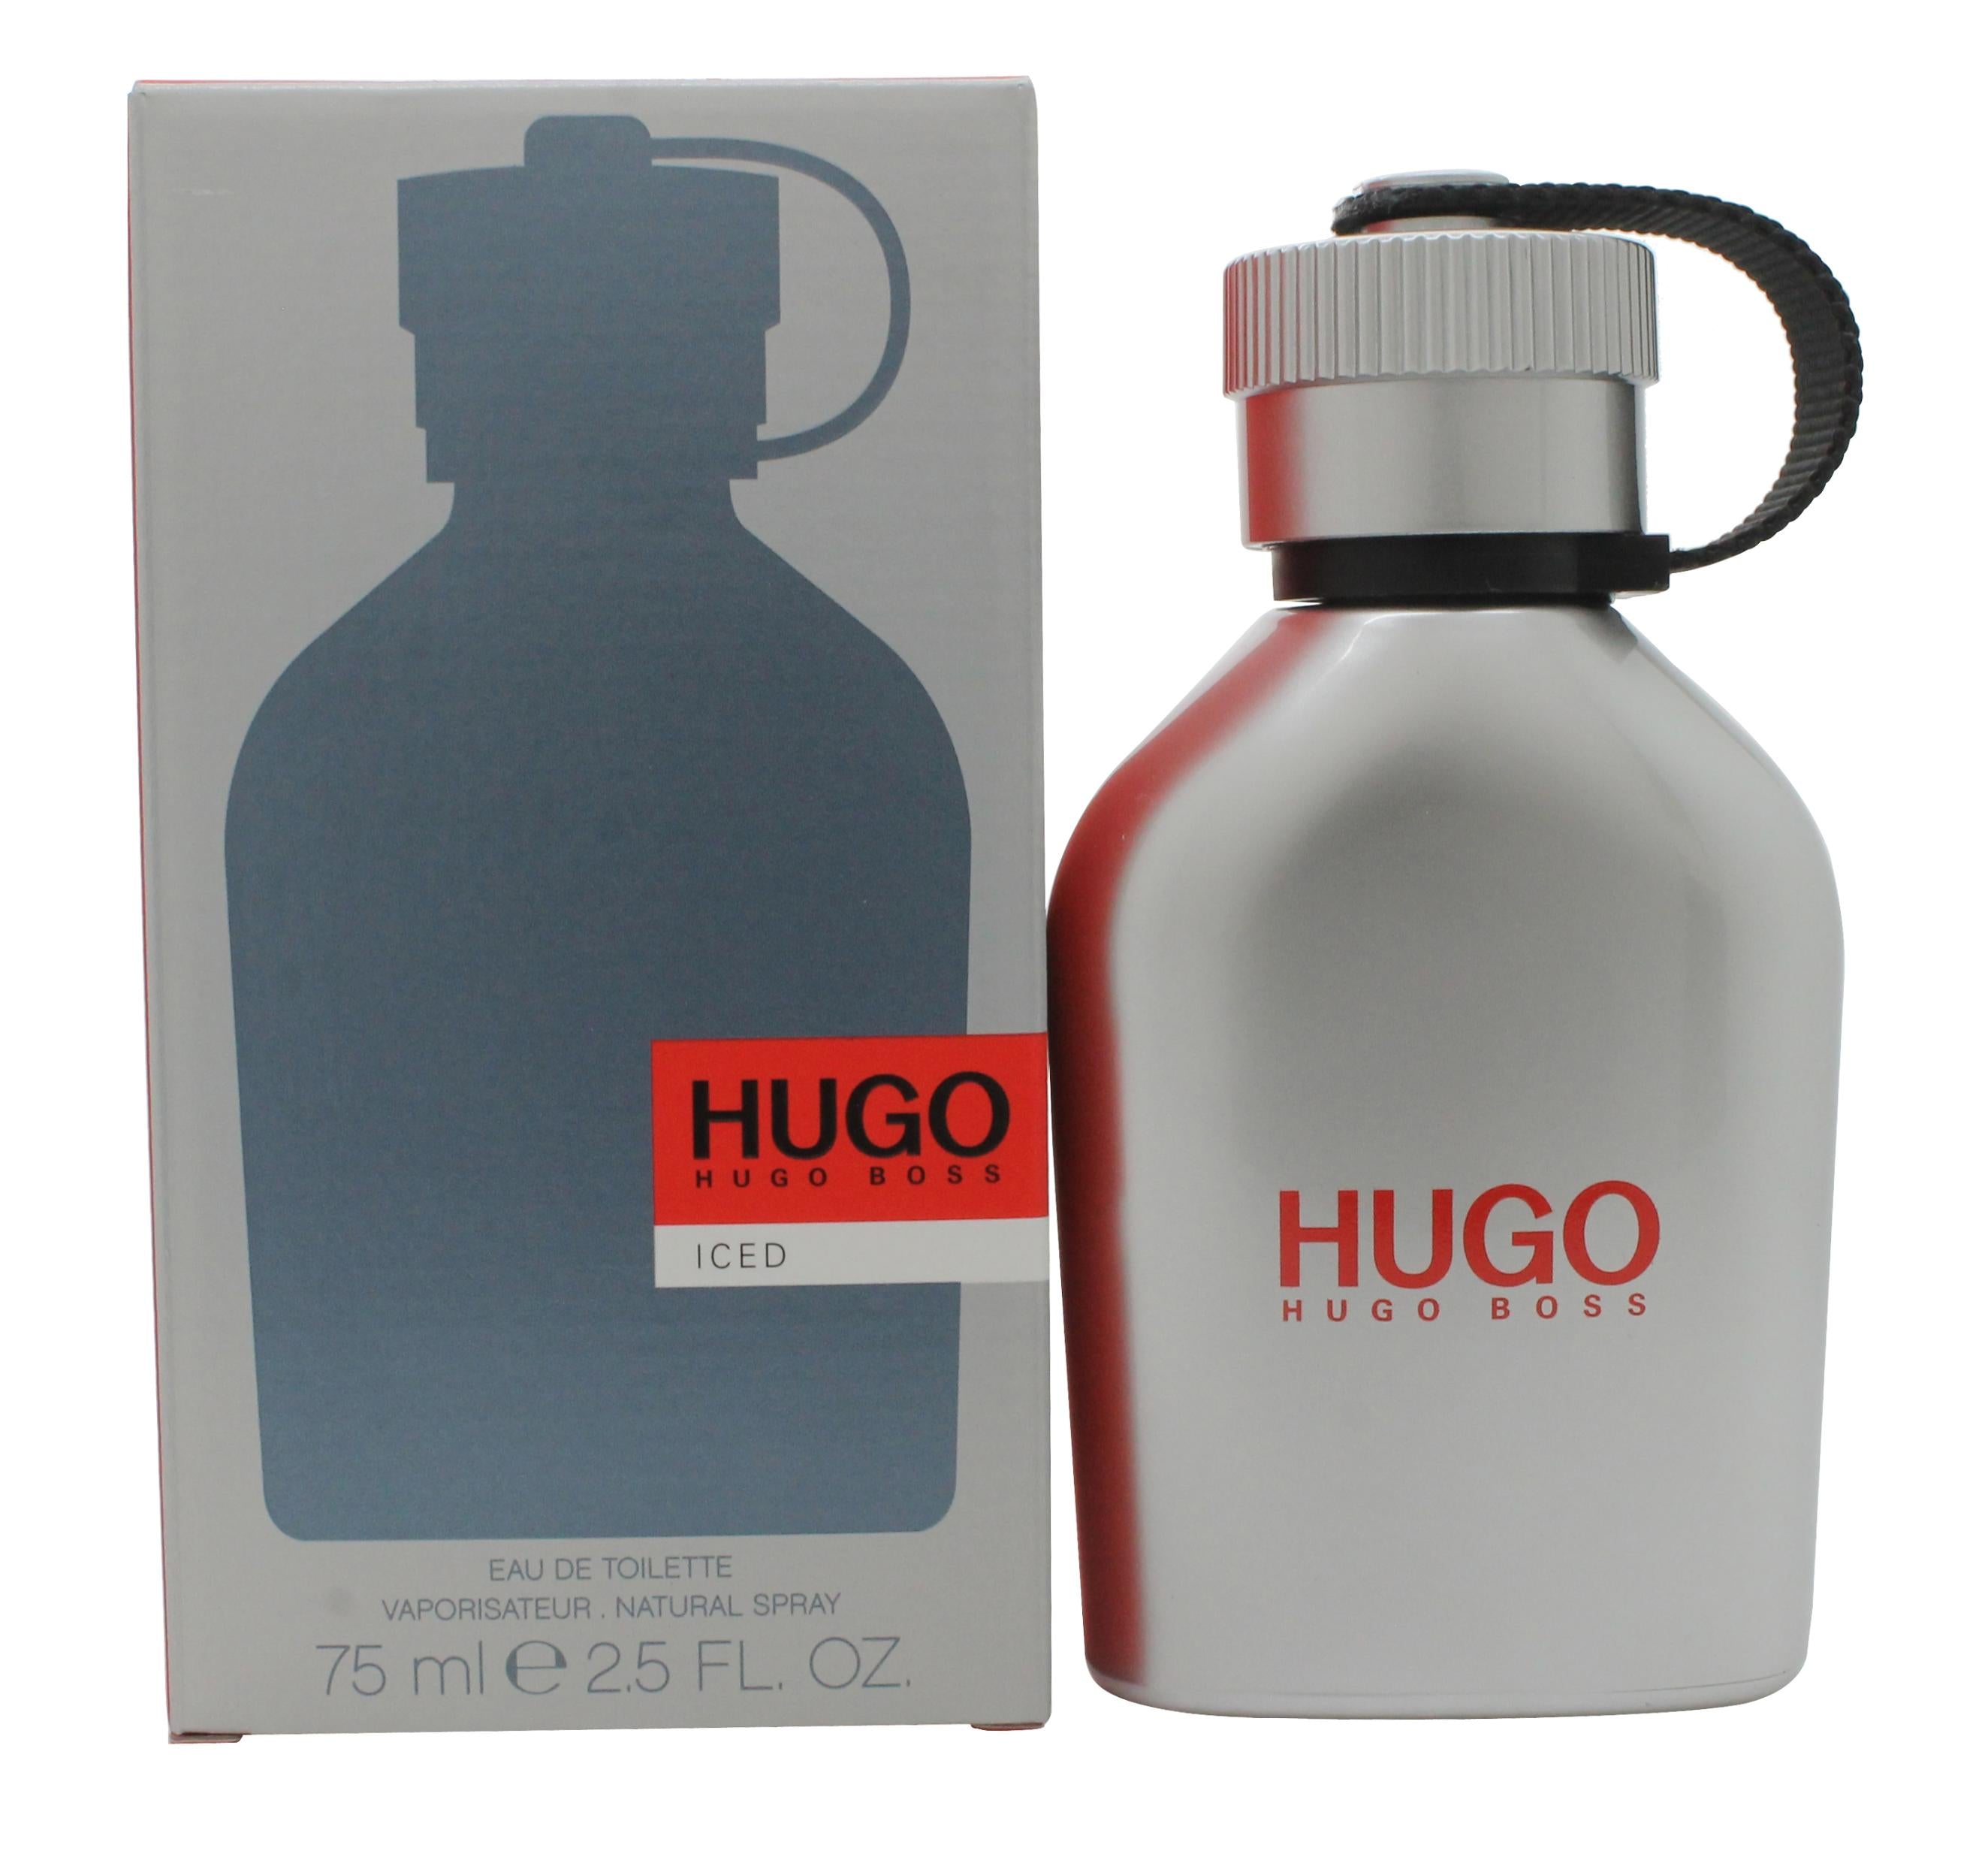 View Hugo Boss Hugo Iced Eau de Toilette 75ml Spray information